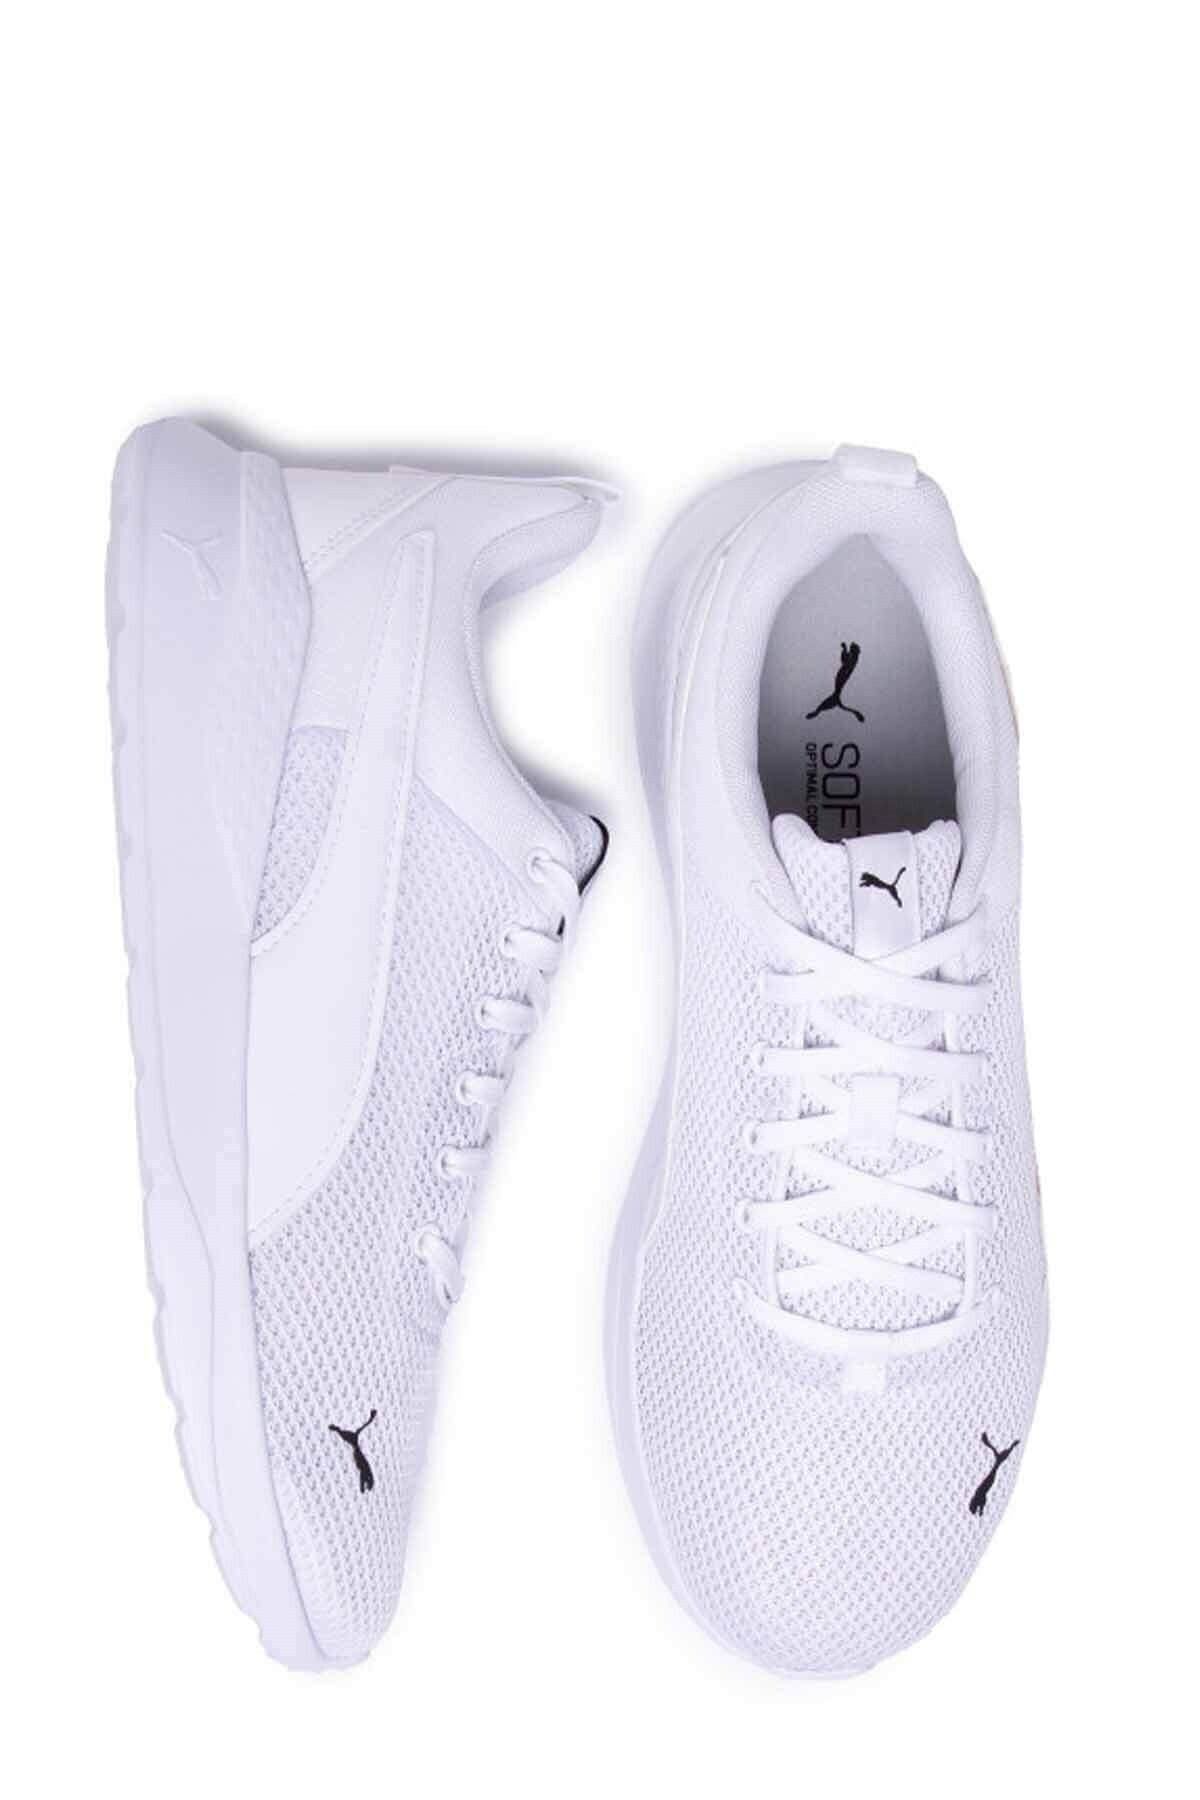 Puma Anzarun Lite Unisex Daily - White Sports Trendyol 37112803 Shoes